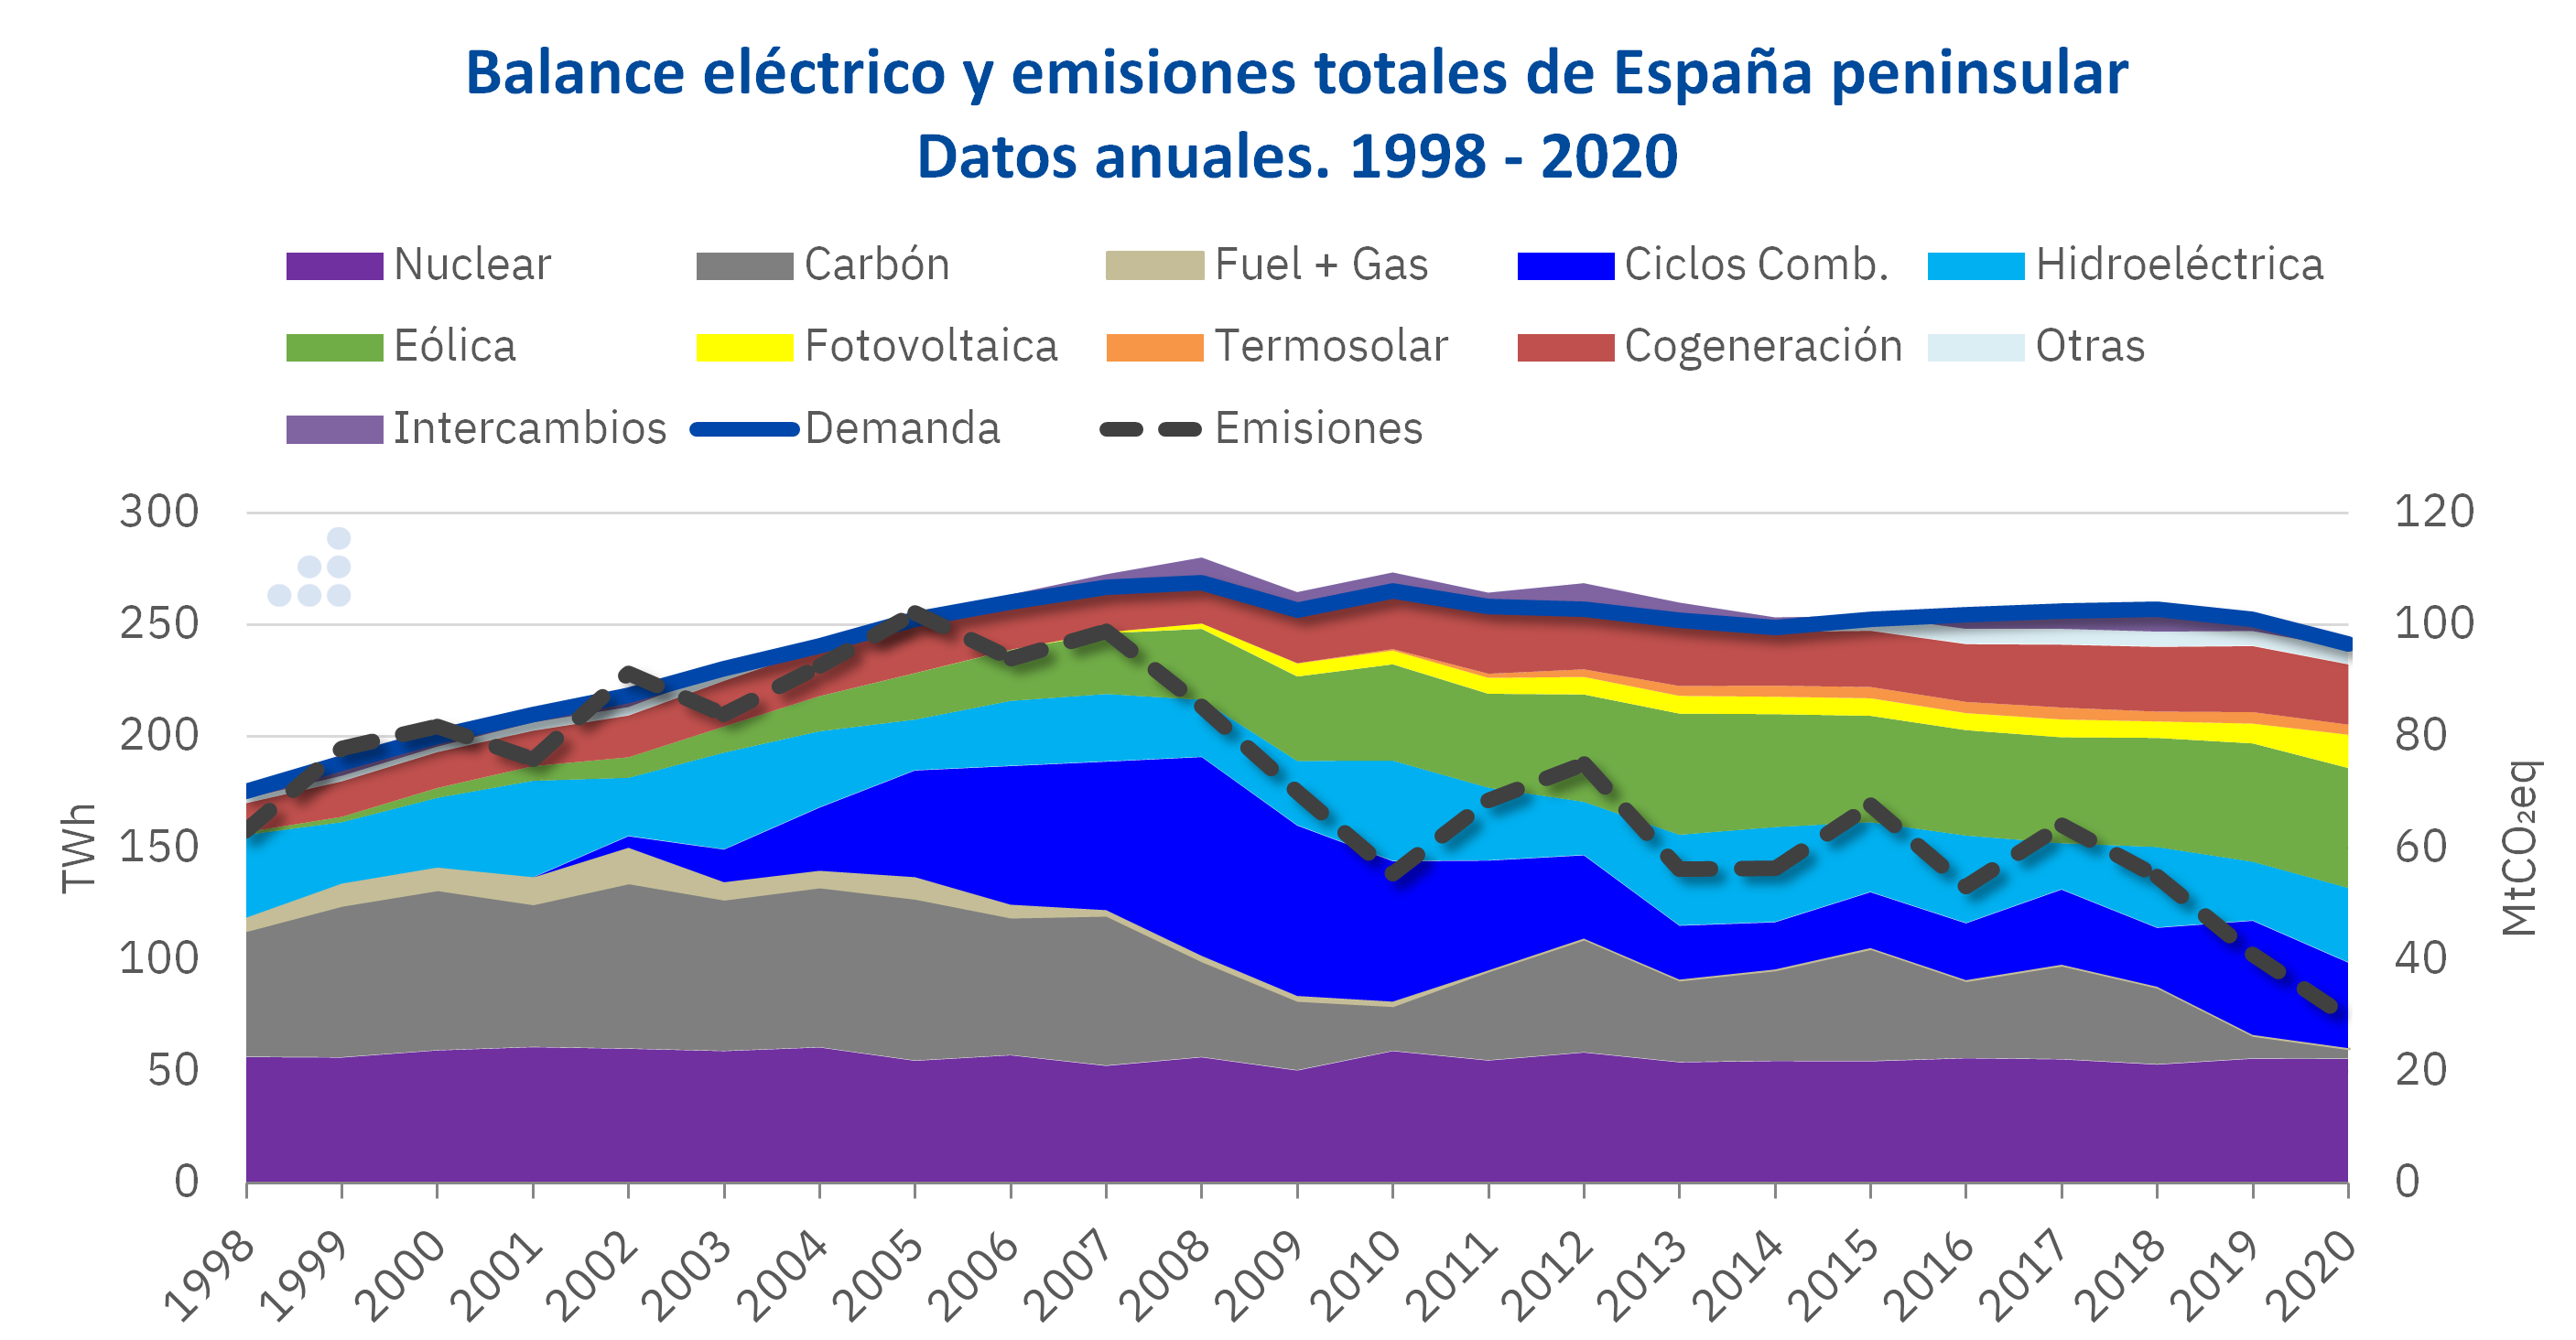 AleaSoft - Balance electrico emisiones totales Espanna peninsular